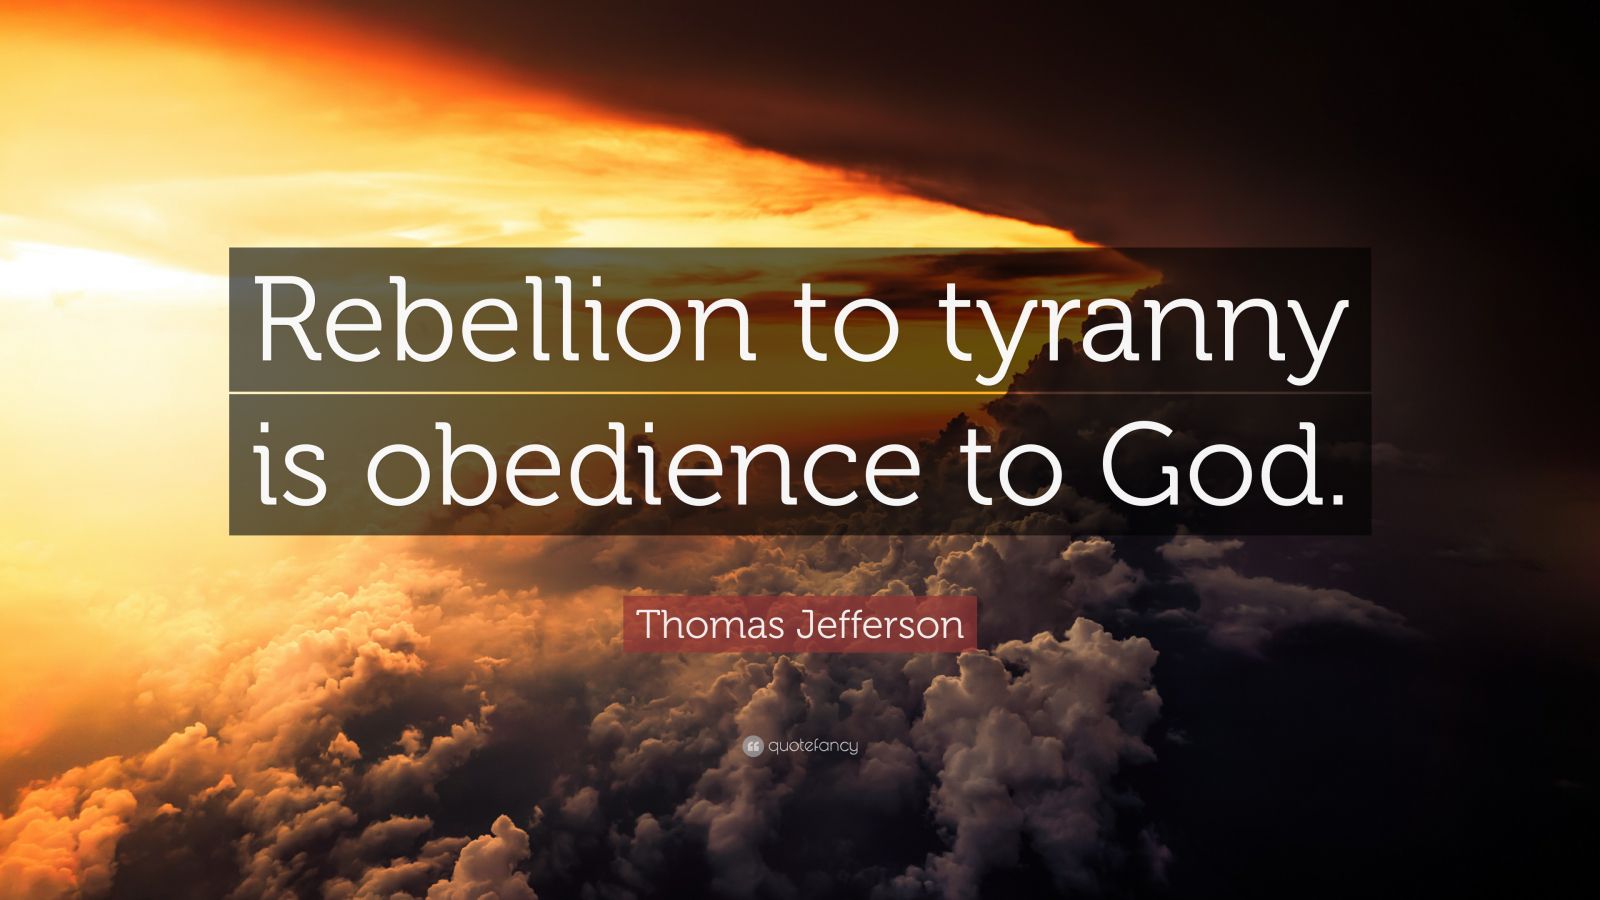 Thomas Jefferson Quote: “Rebellion to tyranny is obedience to God.” (12